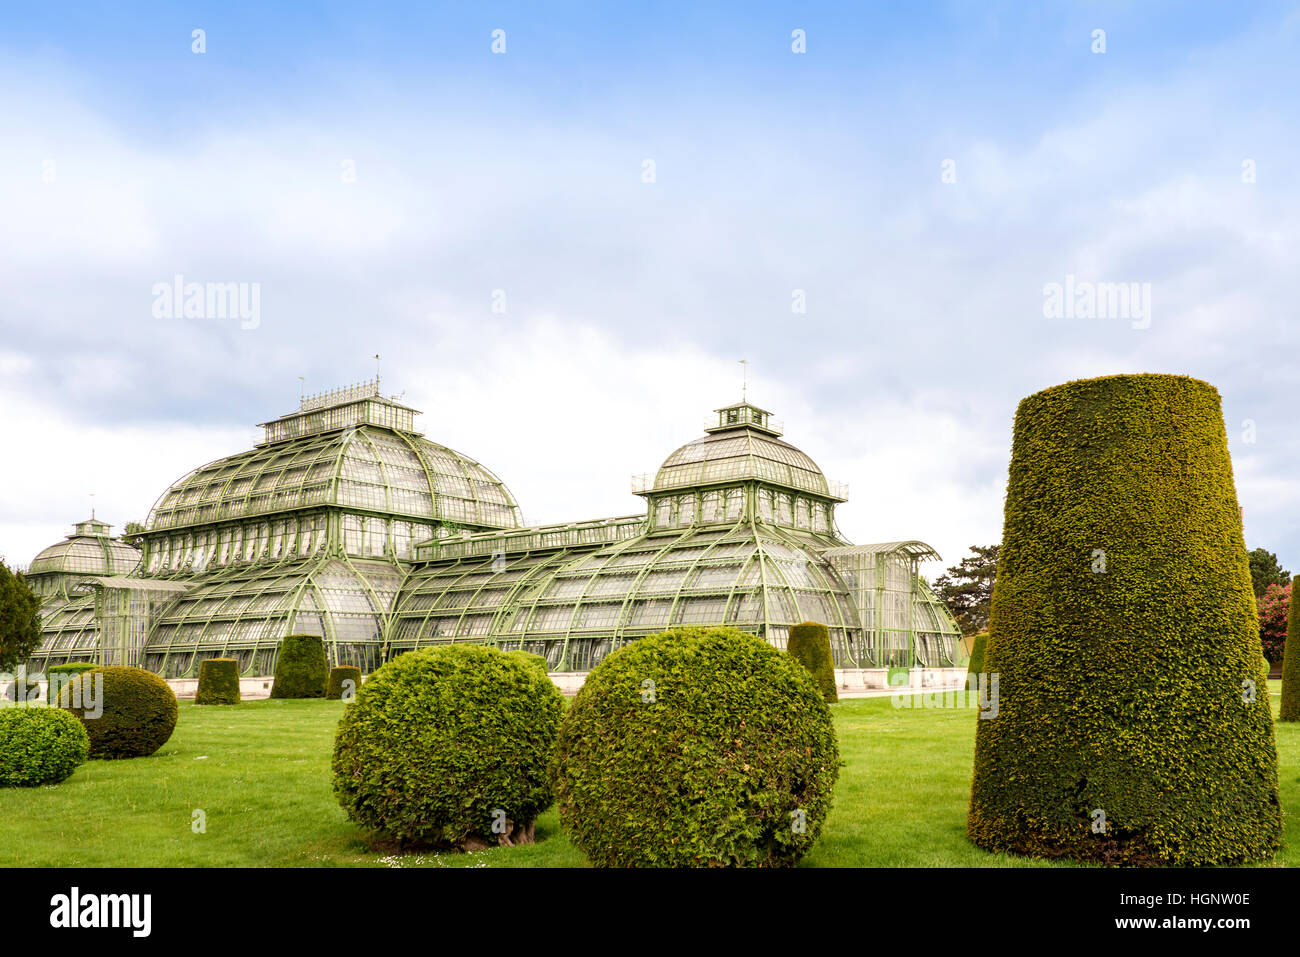 Palmenhaus pavilion greenhouse in garden of schloss, schonbrunn, vienna, austria Stock Photo